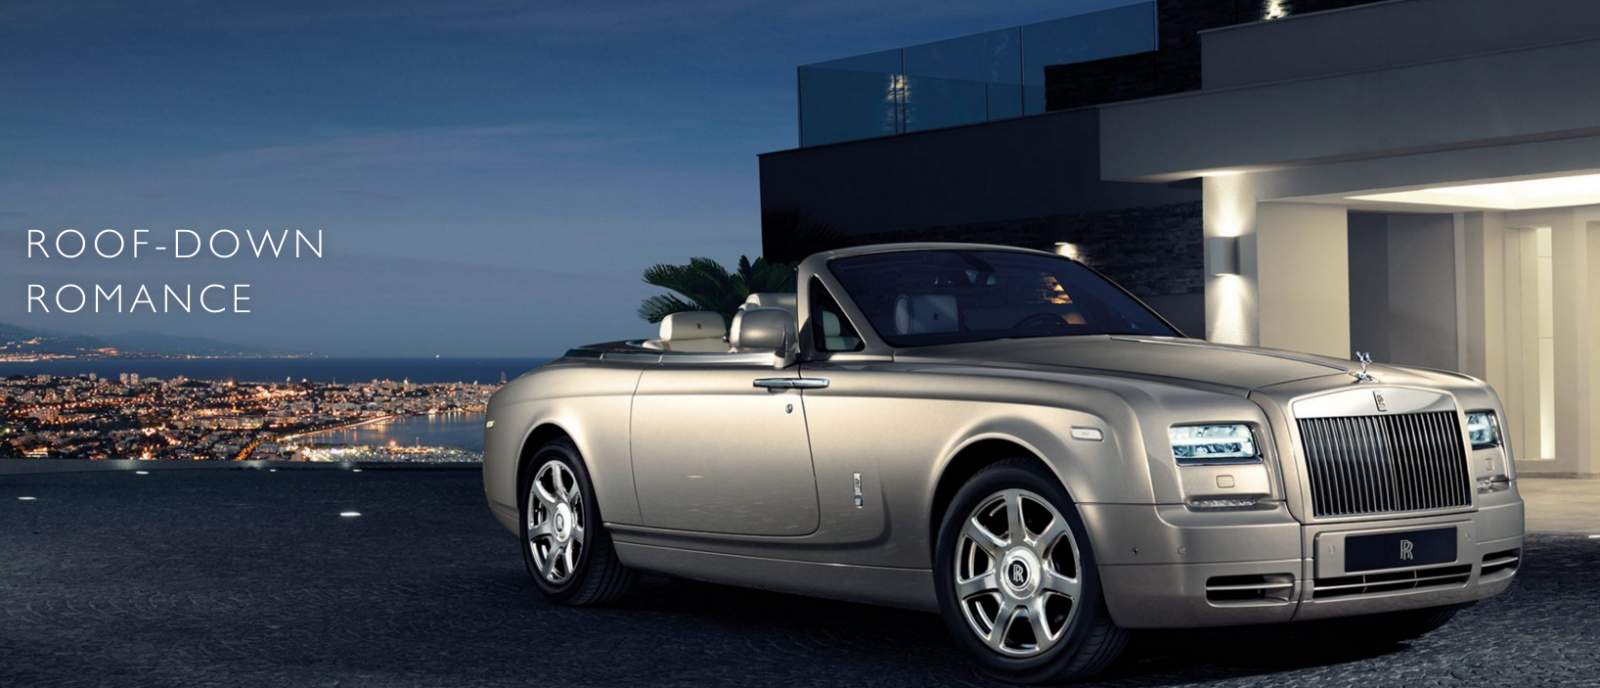 Rolls Royce Drophead Rental  Europe Luxury Services  Luxury Car Rental